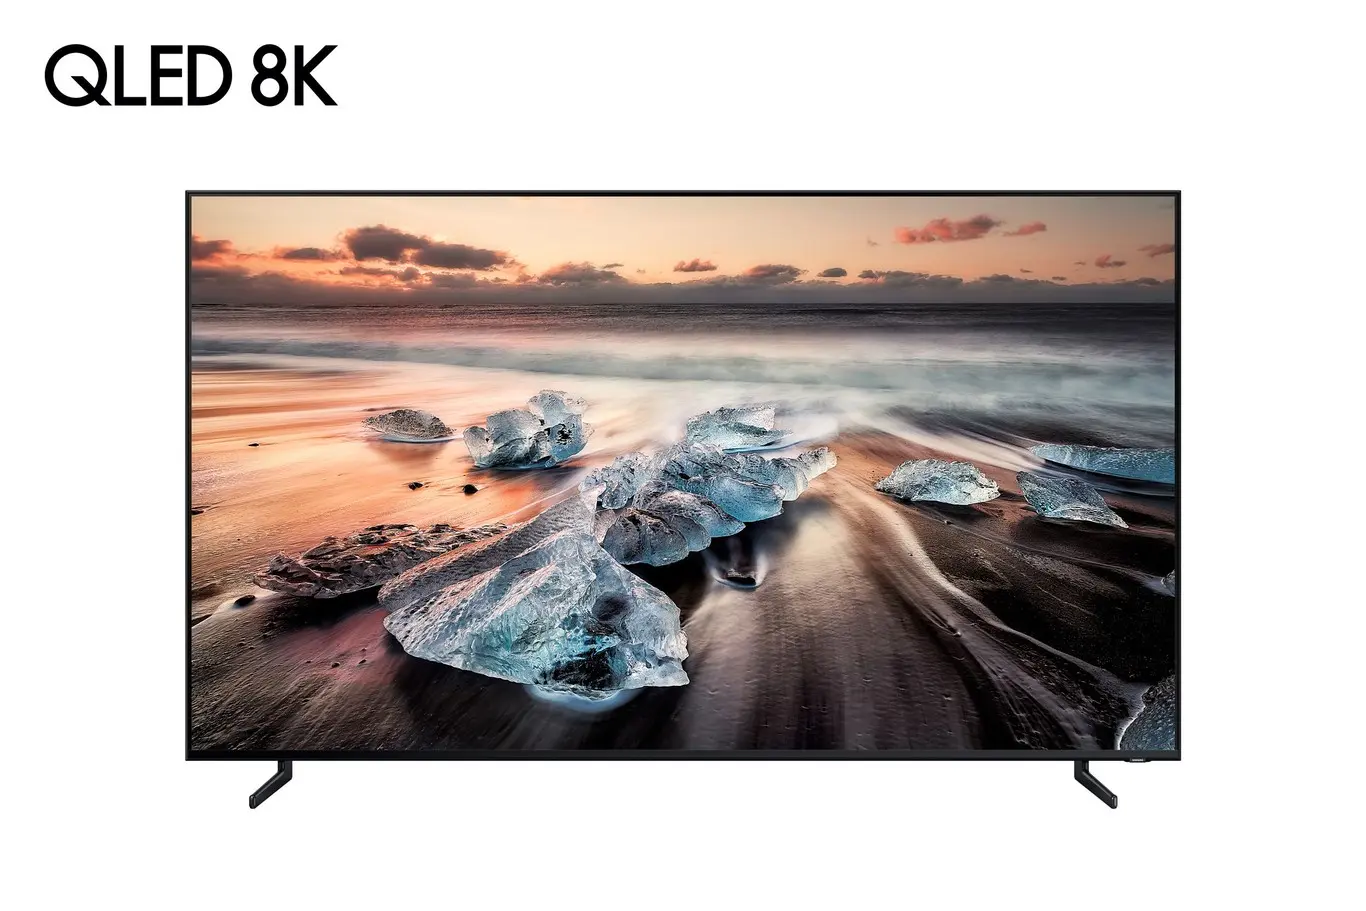 pantalla 8k precio - Cuánto consume un TV 8K